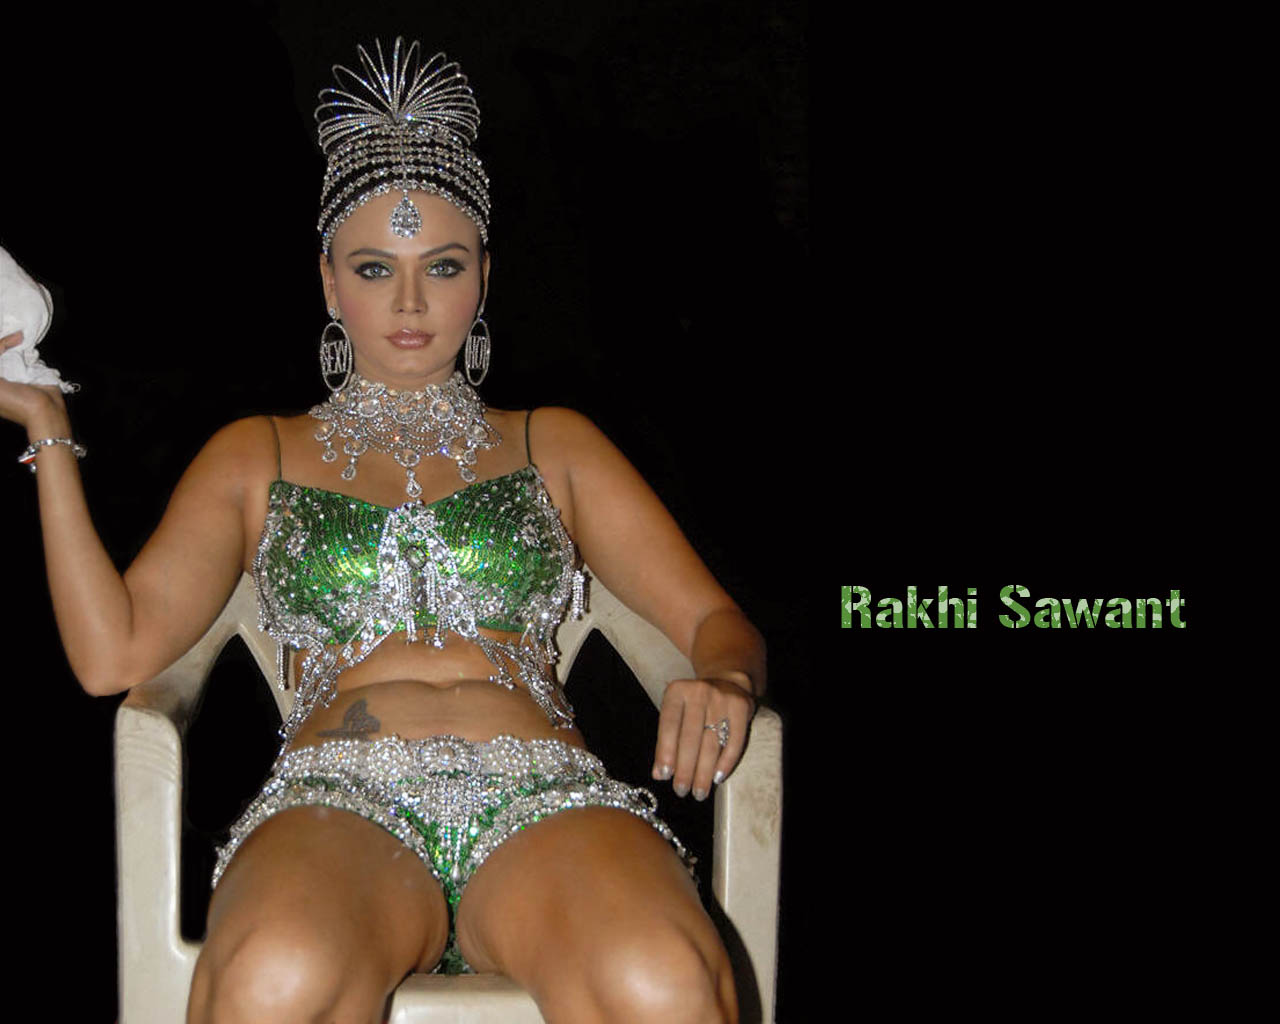 Sexy Videos Of Pornstar Rakhi Sawant - Rakhi sawant cock big dick pic - Pics and galleries